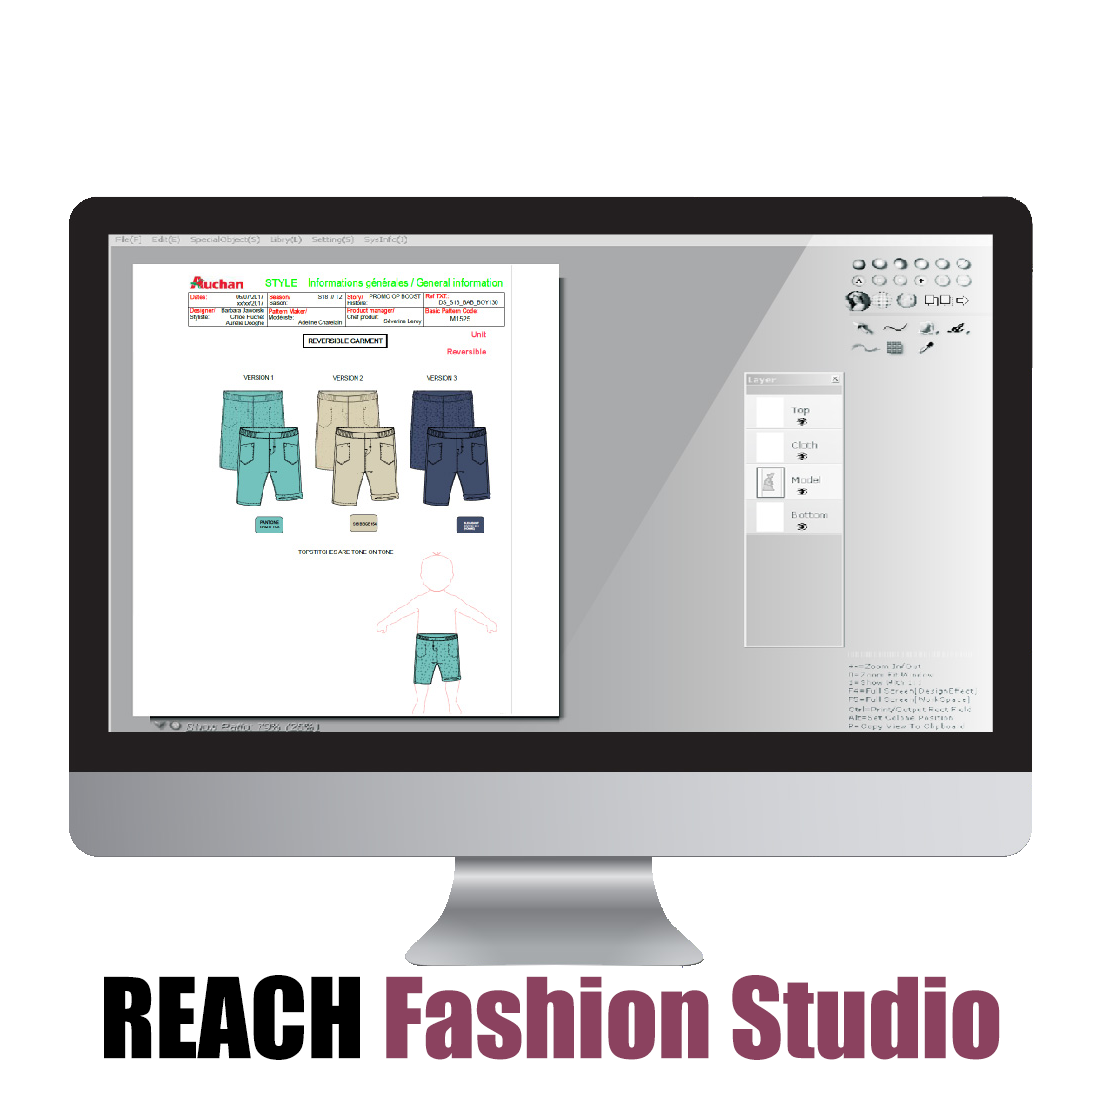 tech-park-software-reach-fashion-studio-2